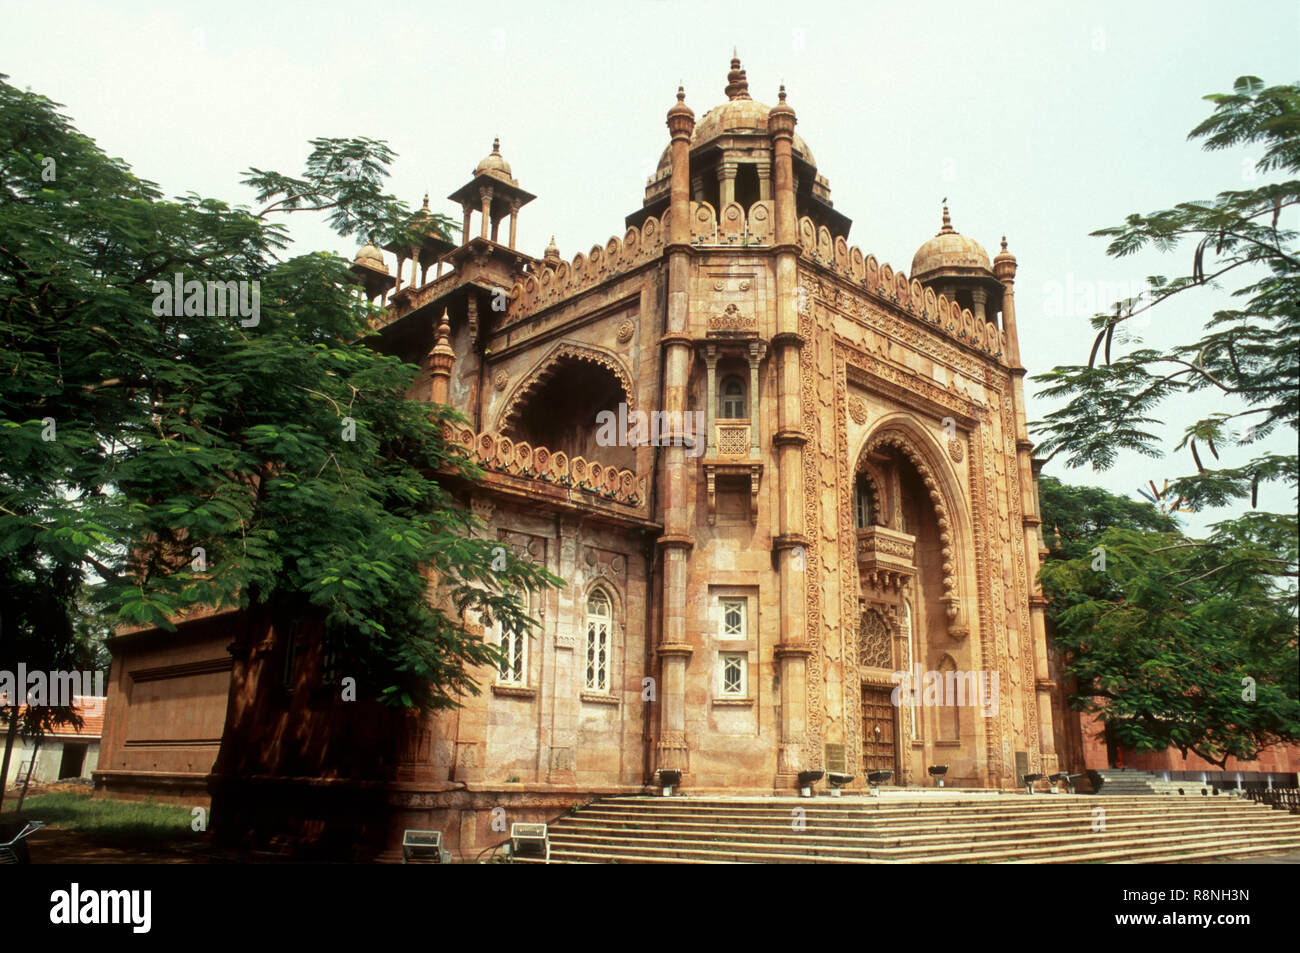 National Art Gallery, Victoria Memorial Hall, Government Museum, Egmore, Madras, Chennai, Tamil Nadu, India, Asia Stock Photo